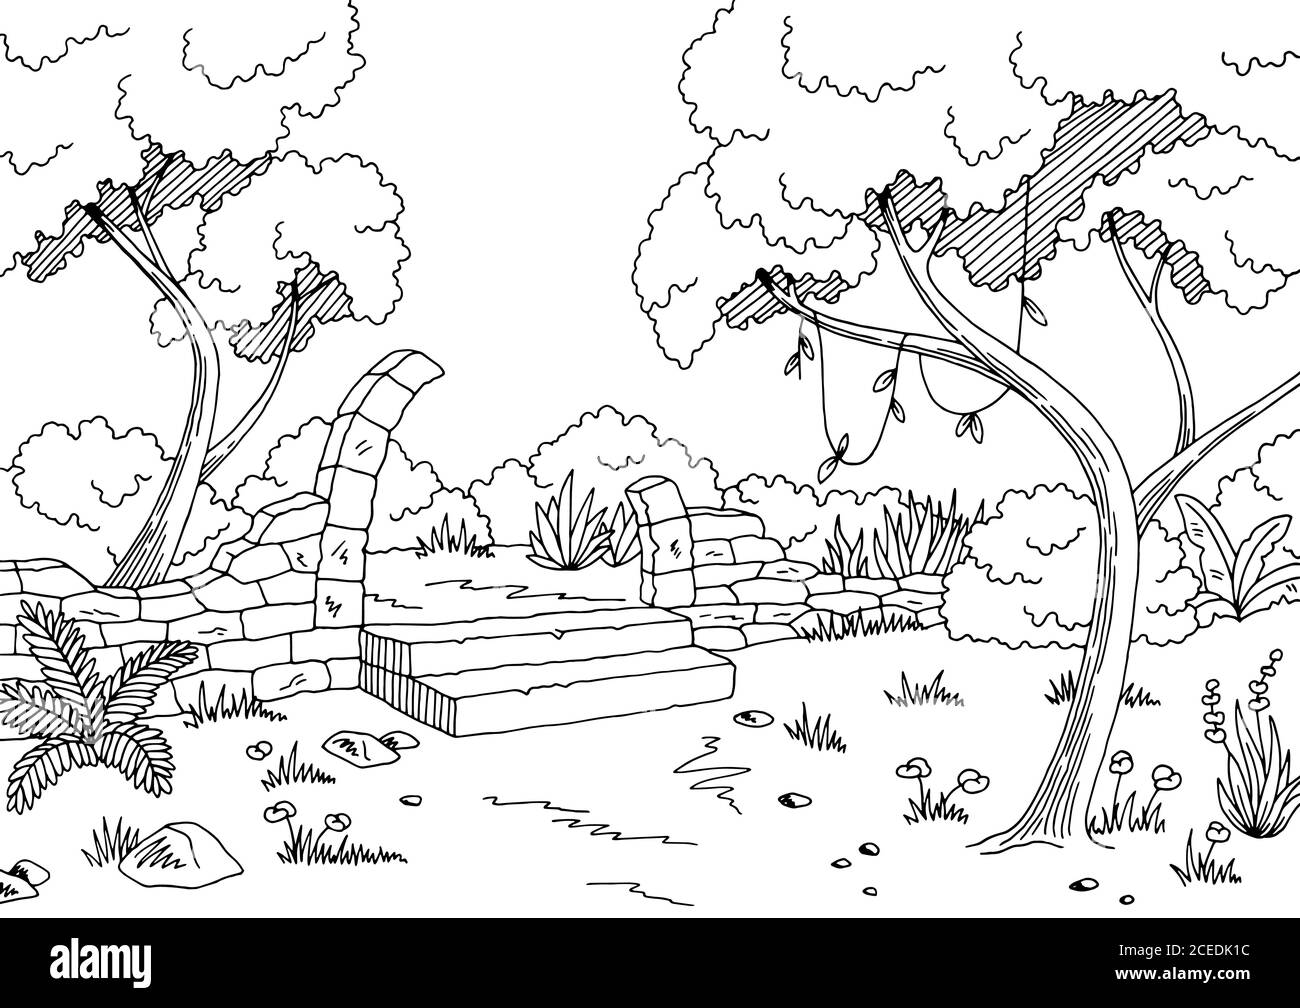 Dschungel Ruine Grafik schwarz weiß Landschaft Skizze Illustration Vektor Stock Vektor